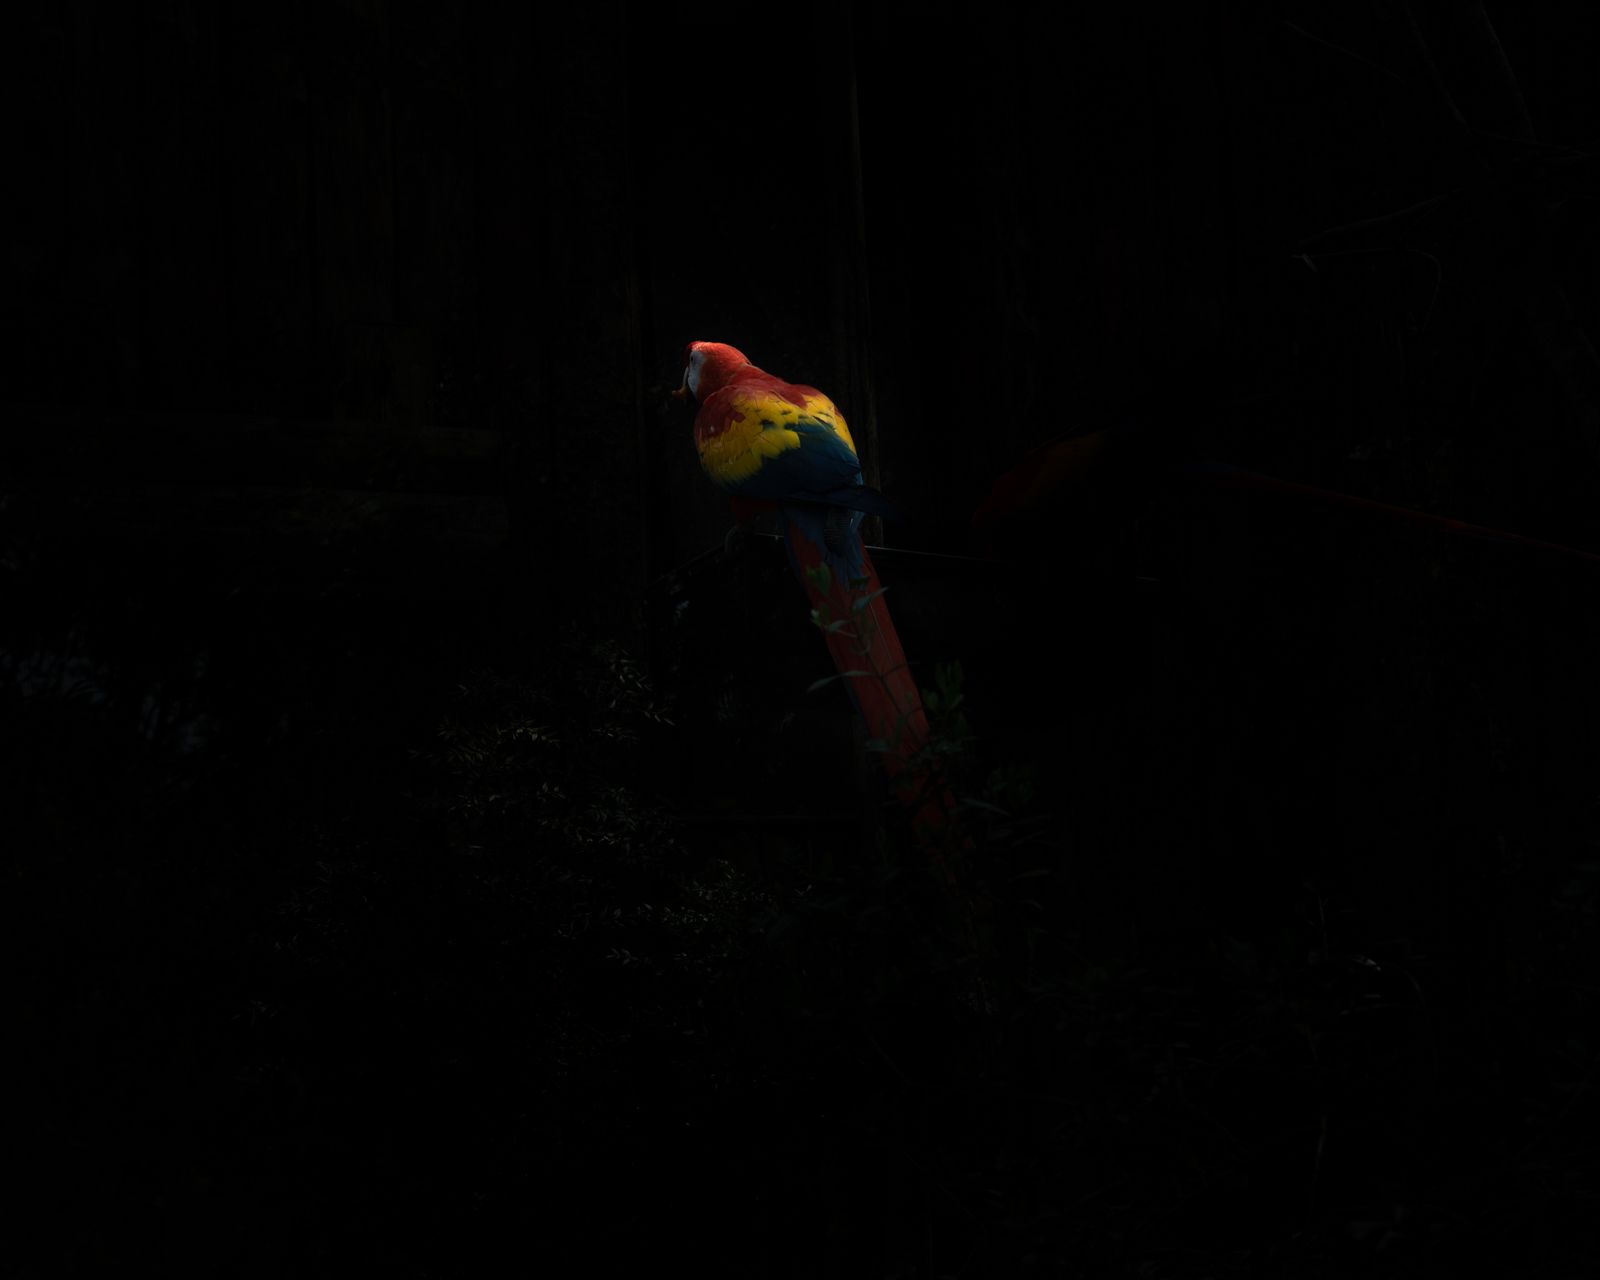 © Annalaura Cattelan - 01 - A specimen of macaw parrot at Parco Natura Viva (Bussolengo, VR)